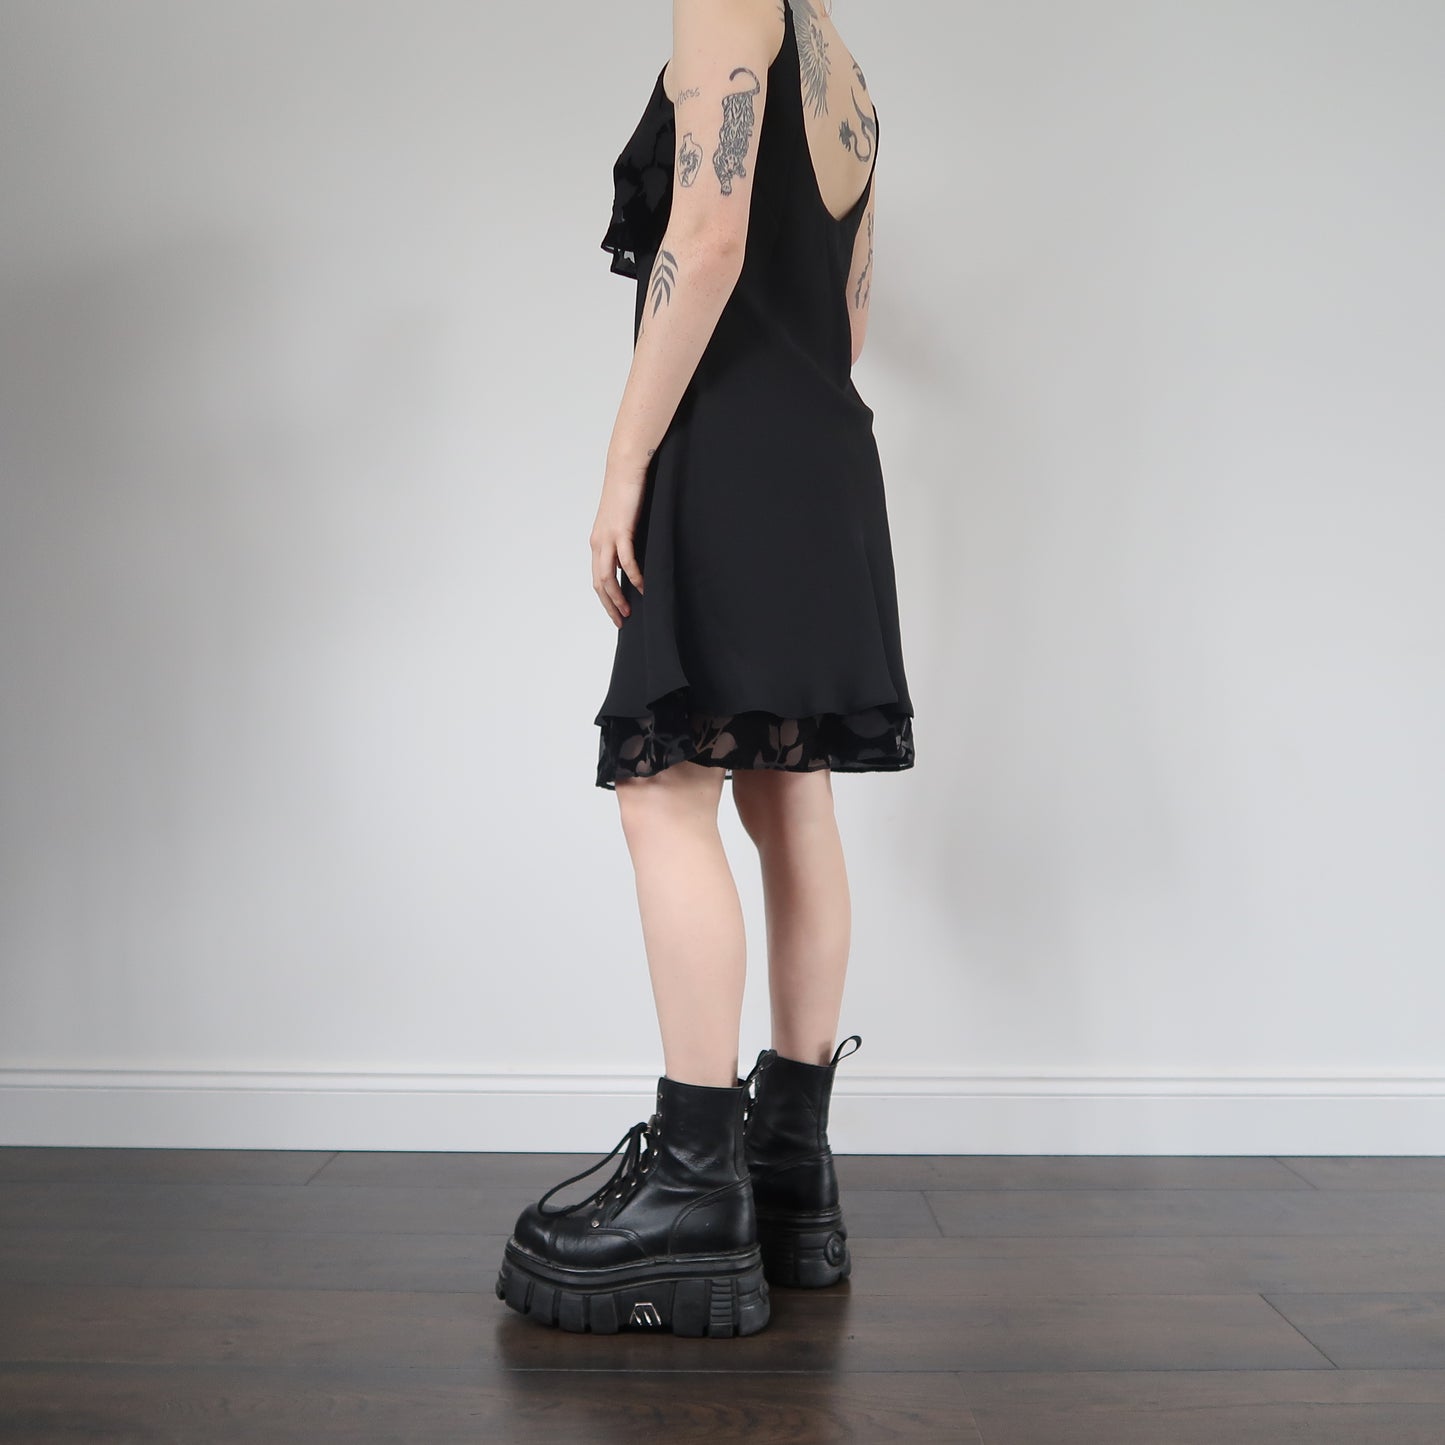 Black dress - size 12